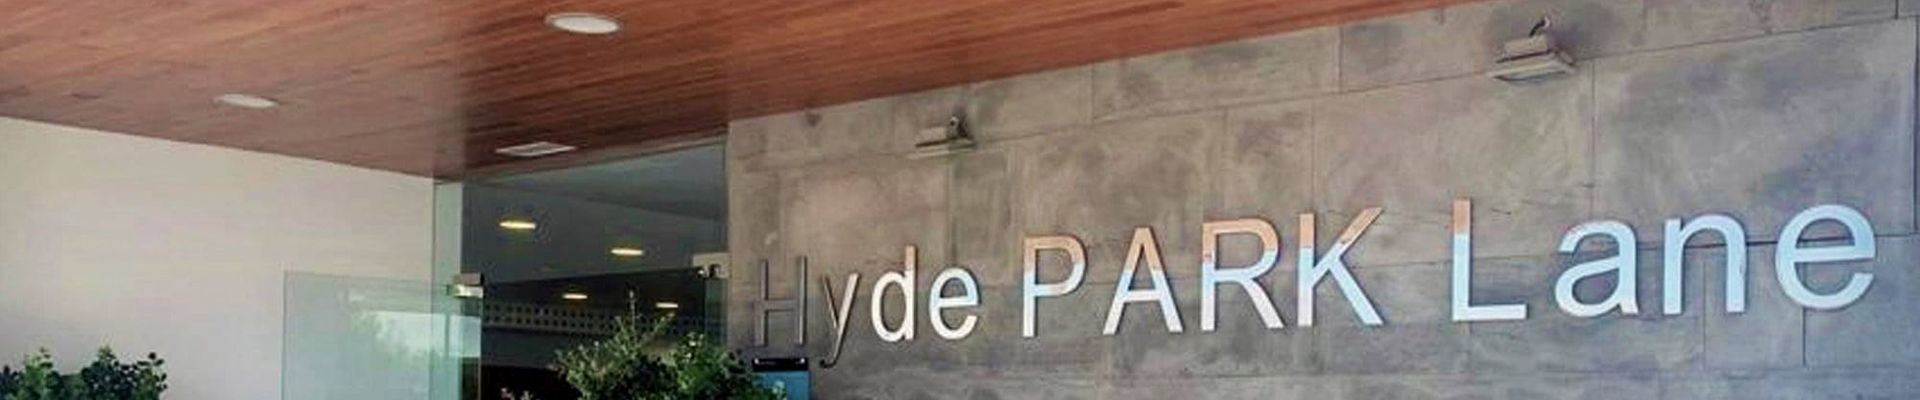 Hyde Park Lane resort